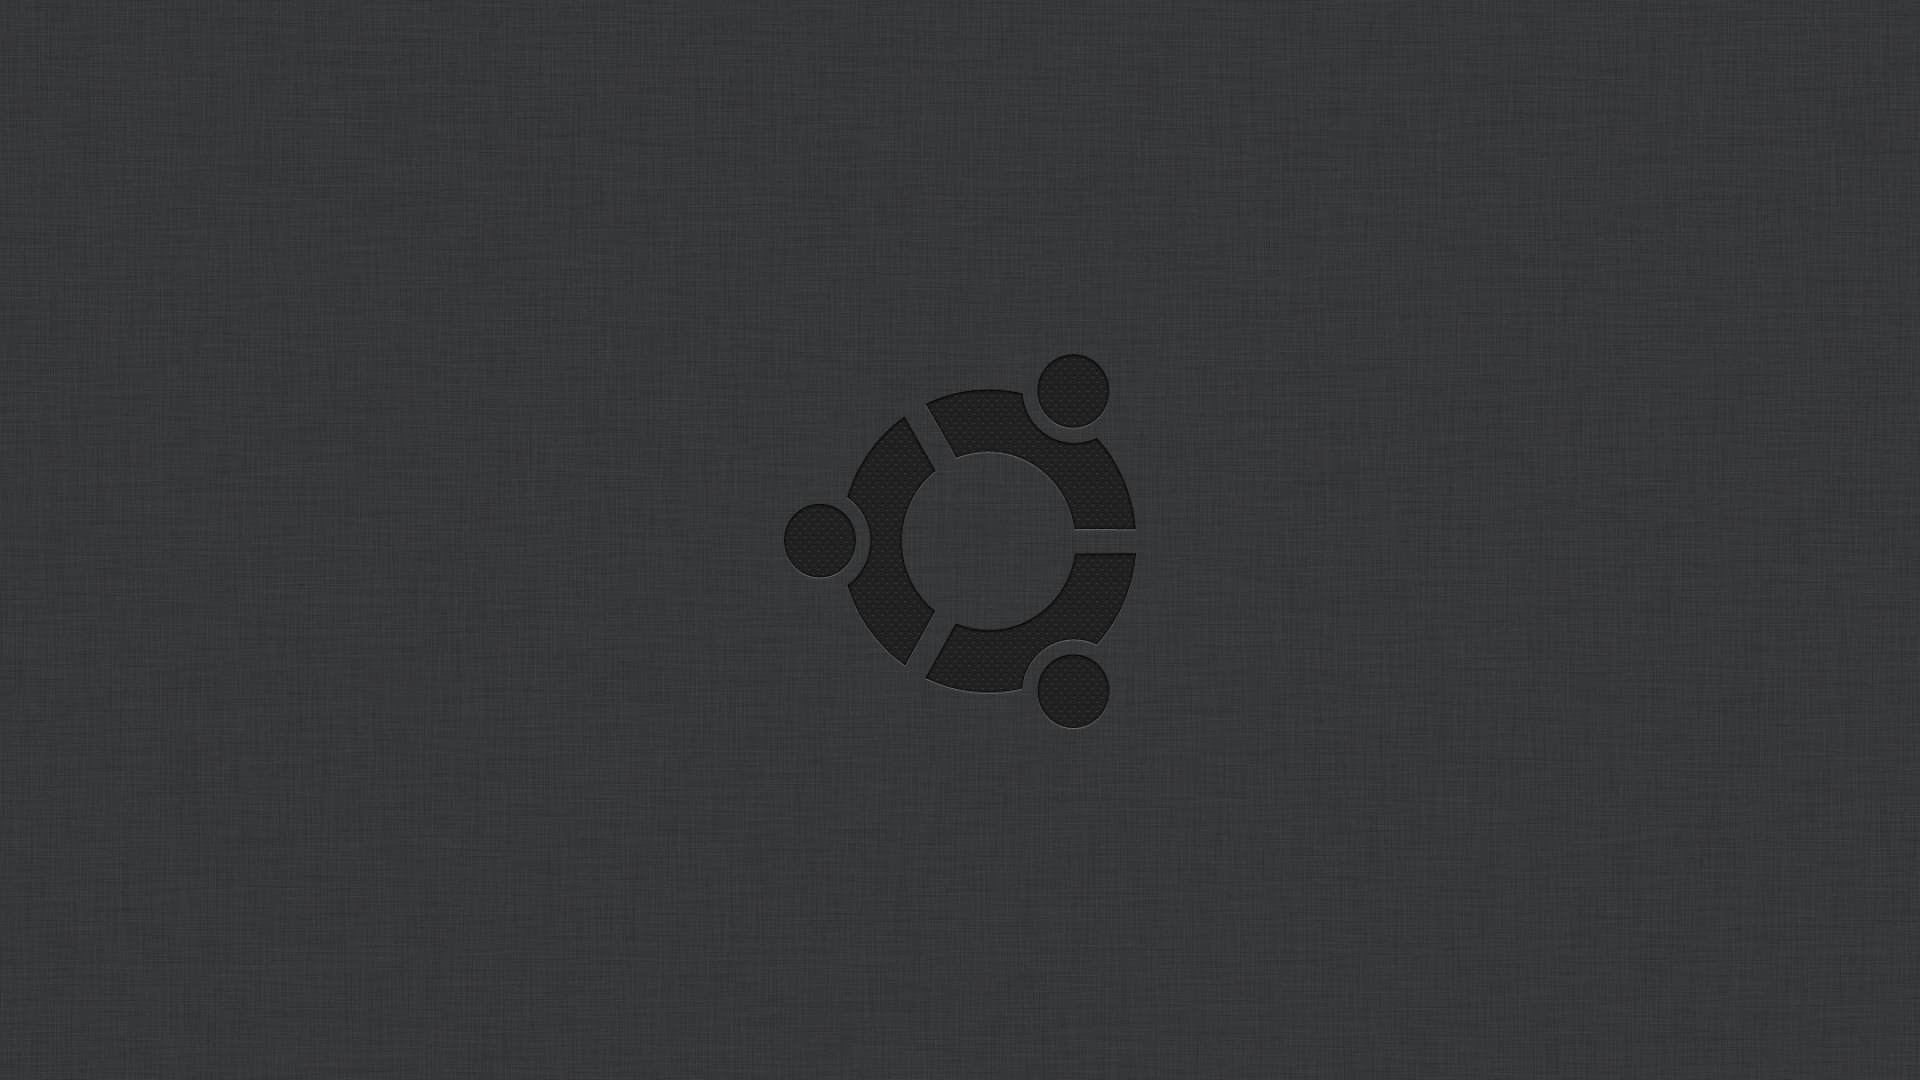 Ubuntu Wallpaper 1920x1080